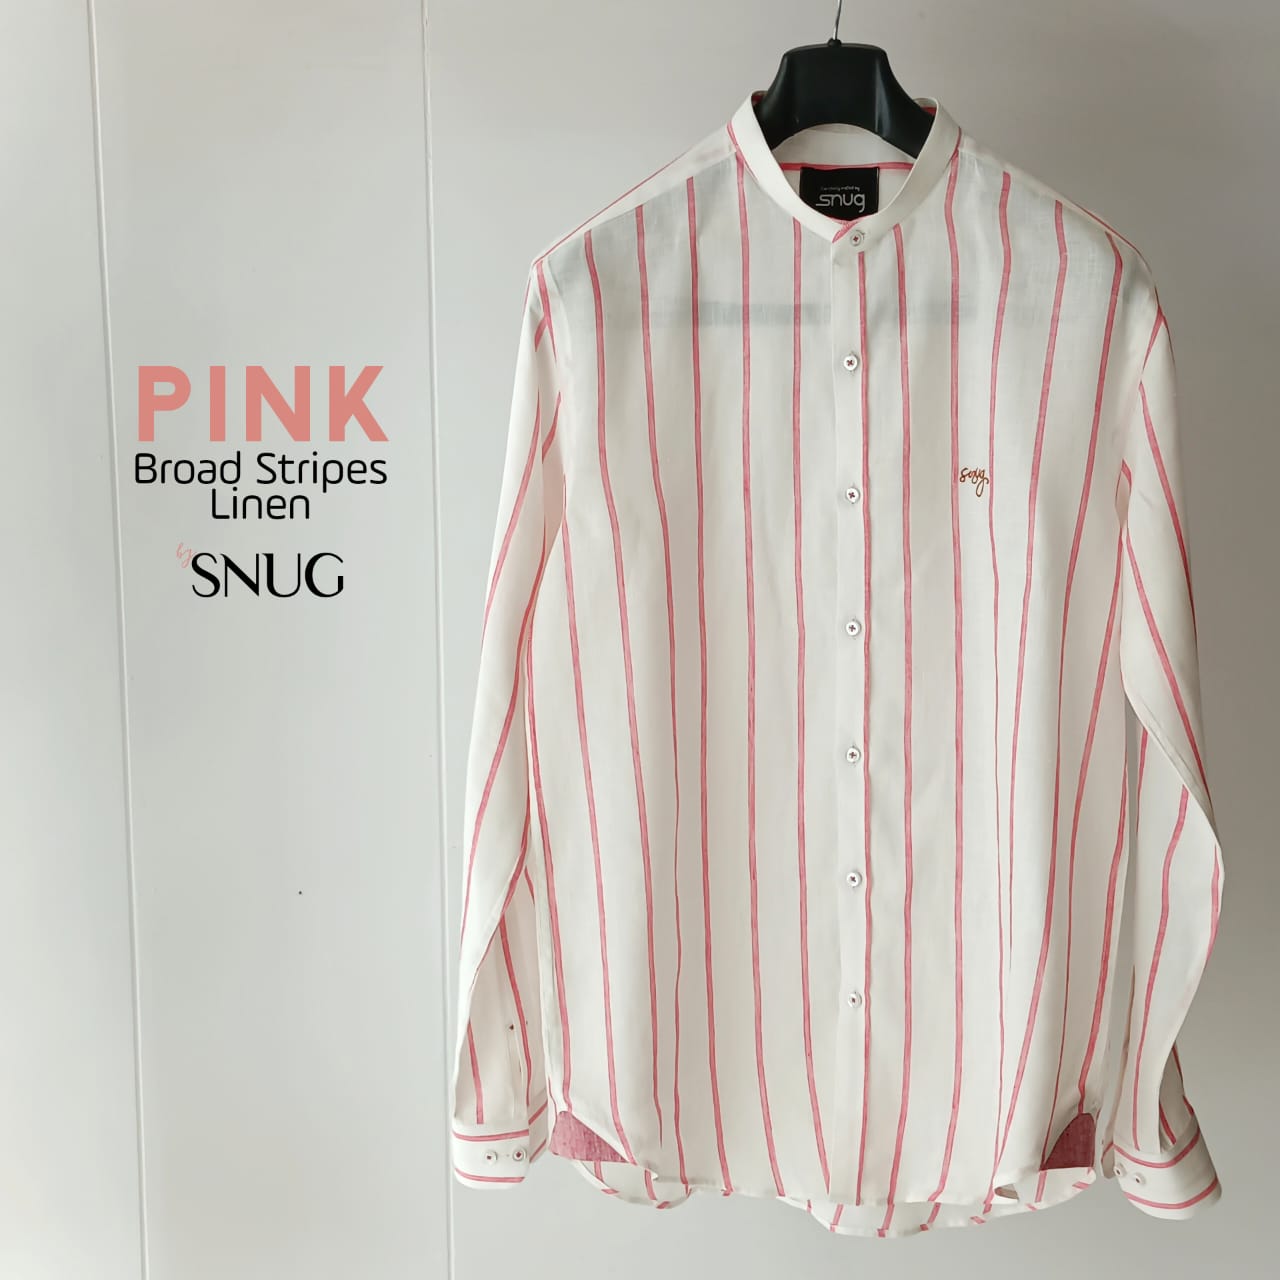 Pink Broad Stripes Linen Shirt - Snug